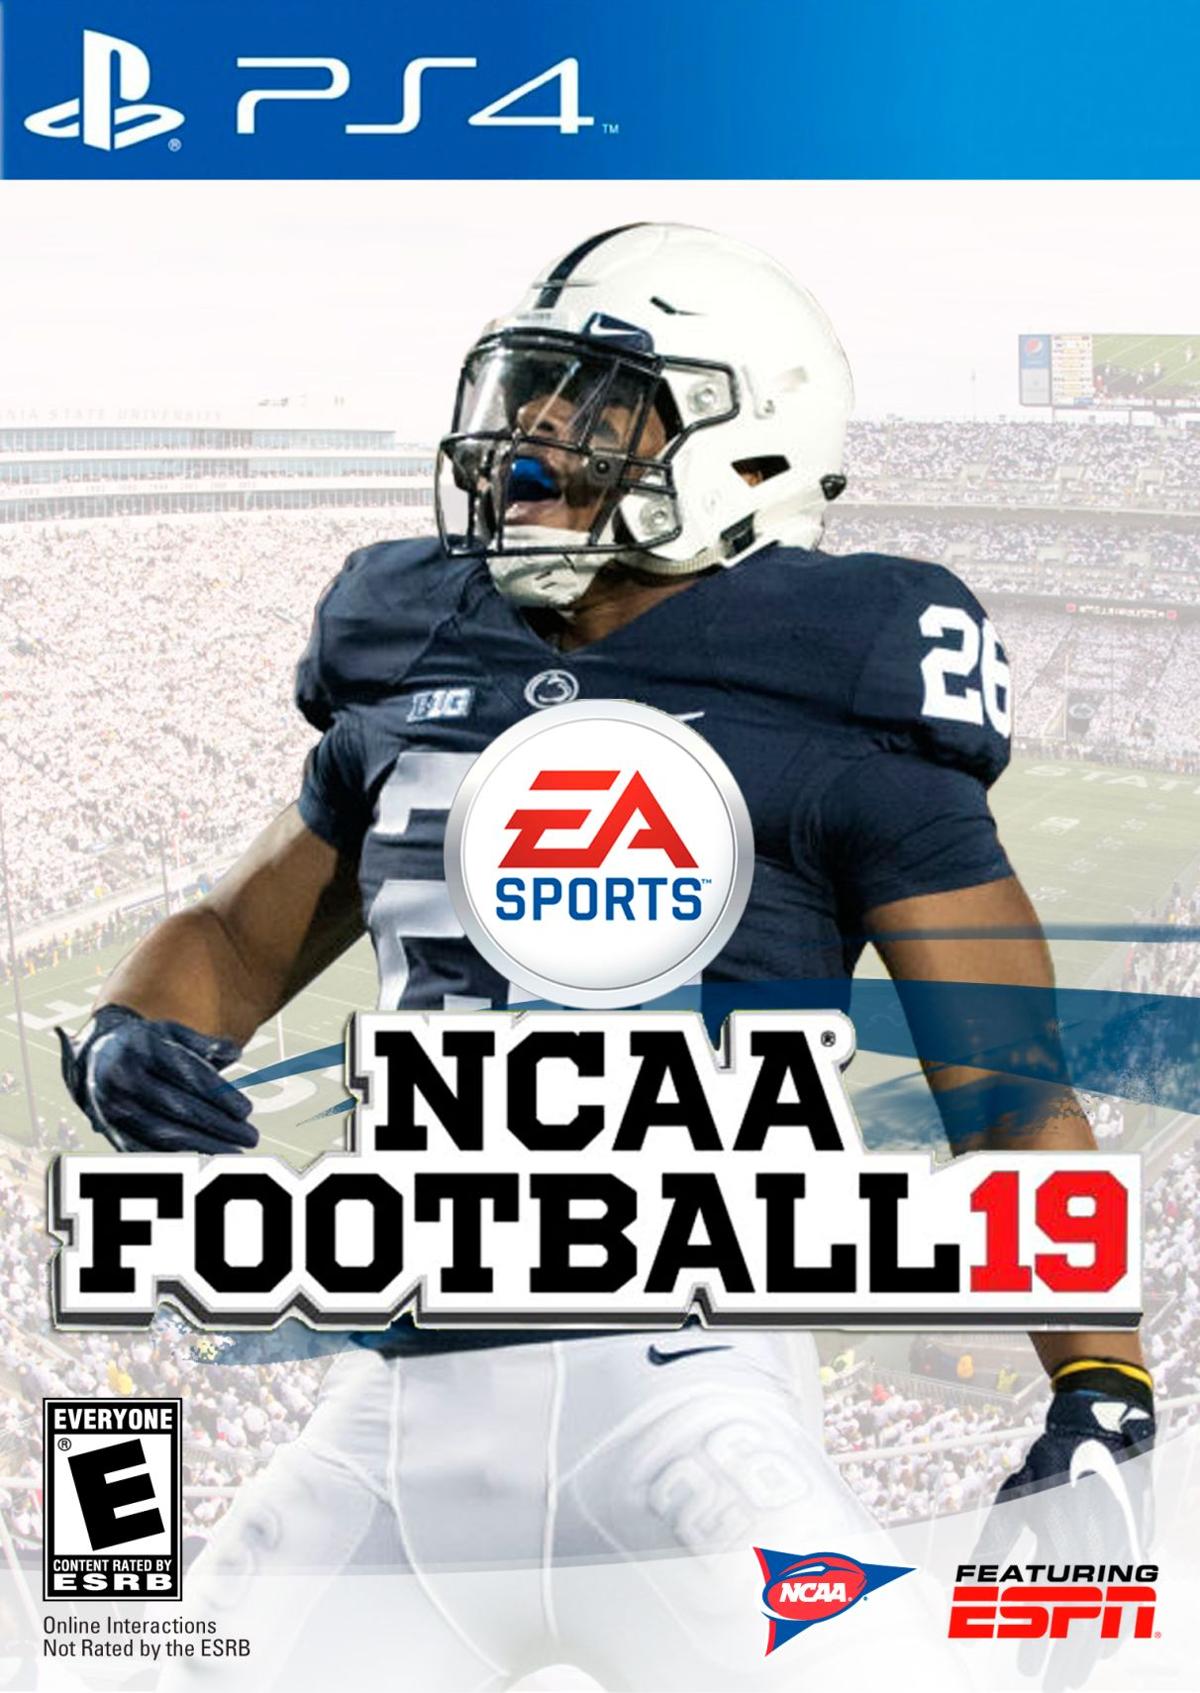 Why NCAA football video game needs to make its return ...